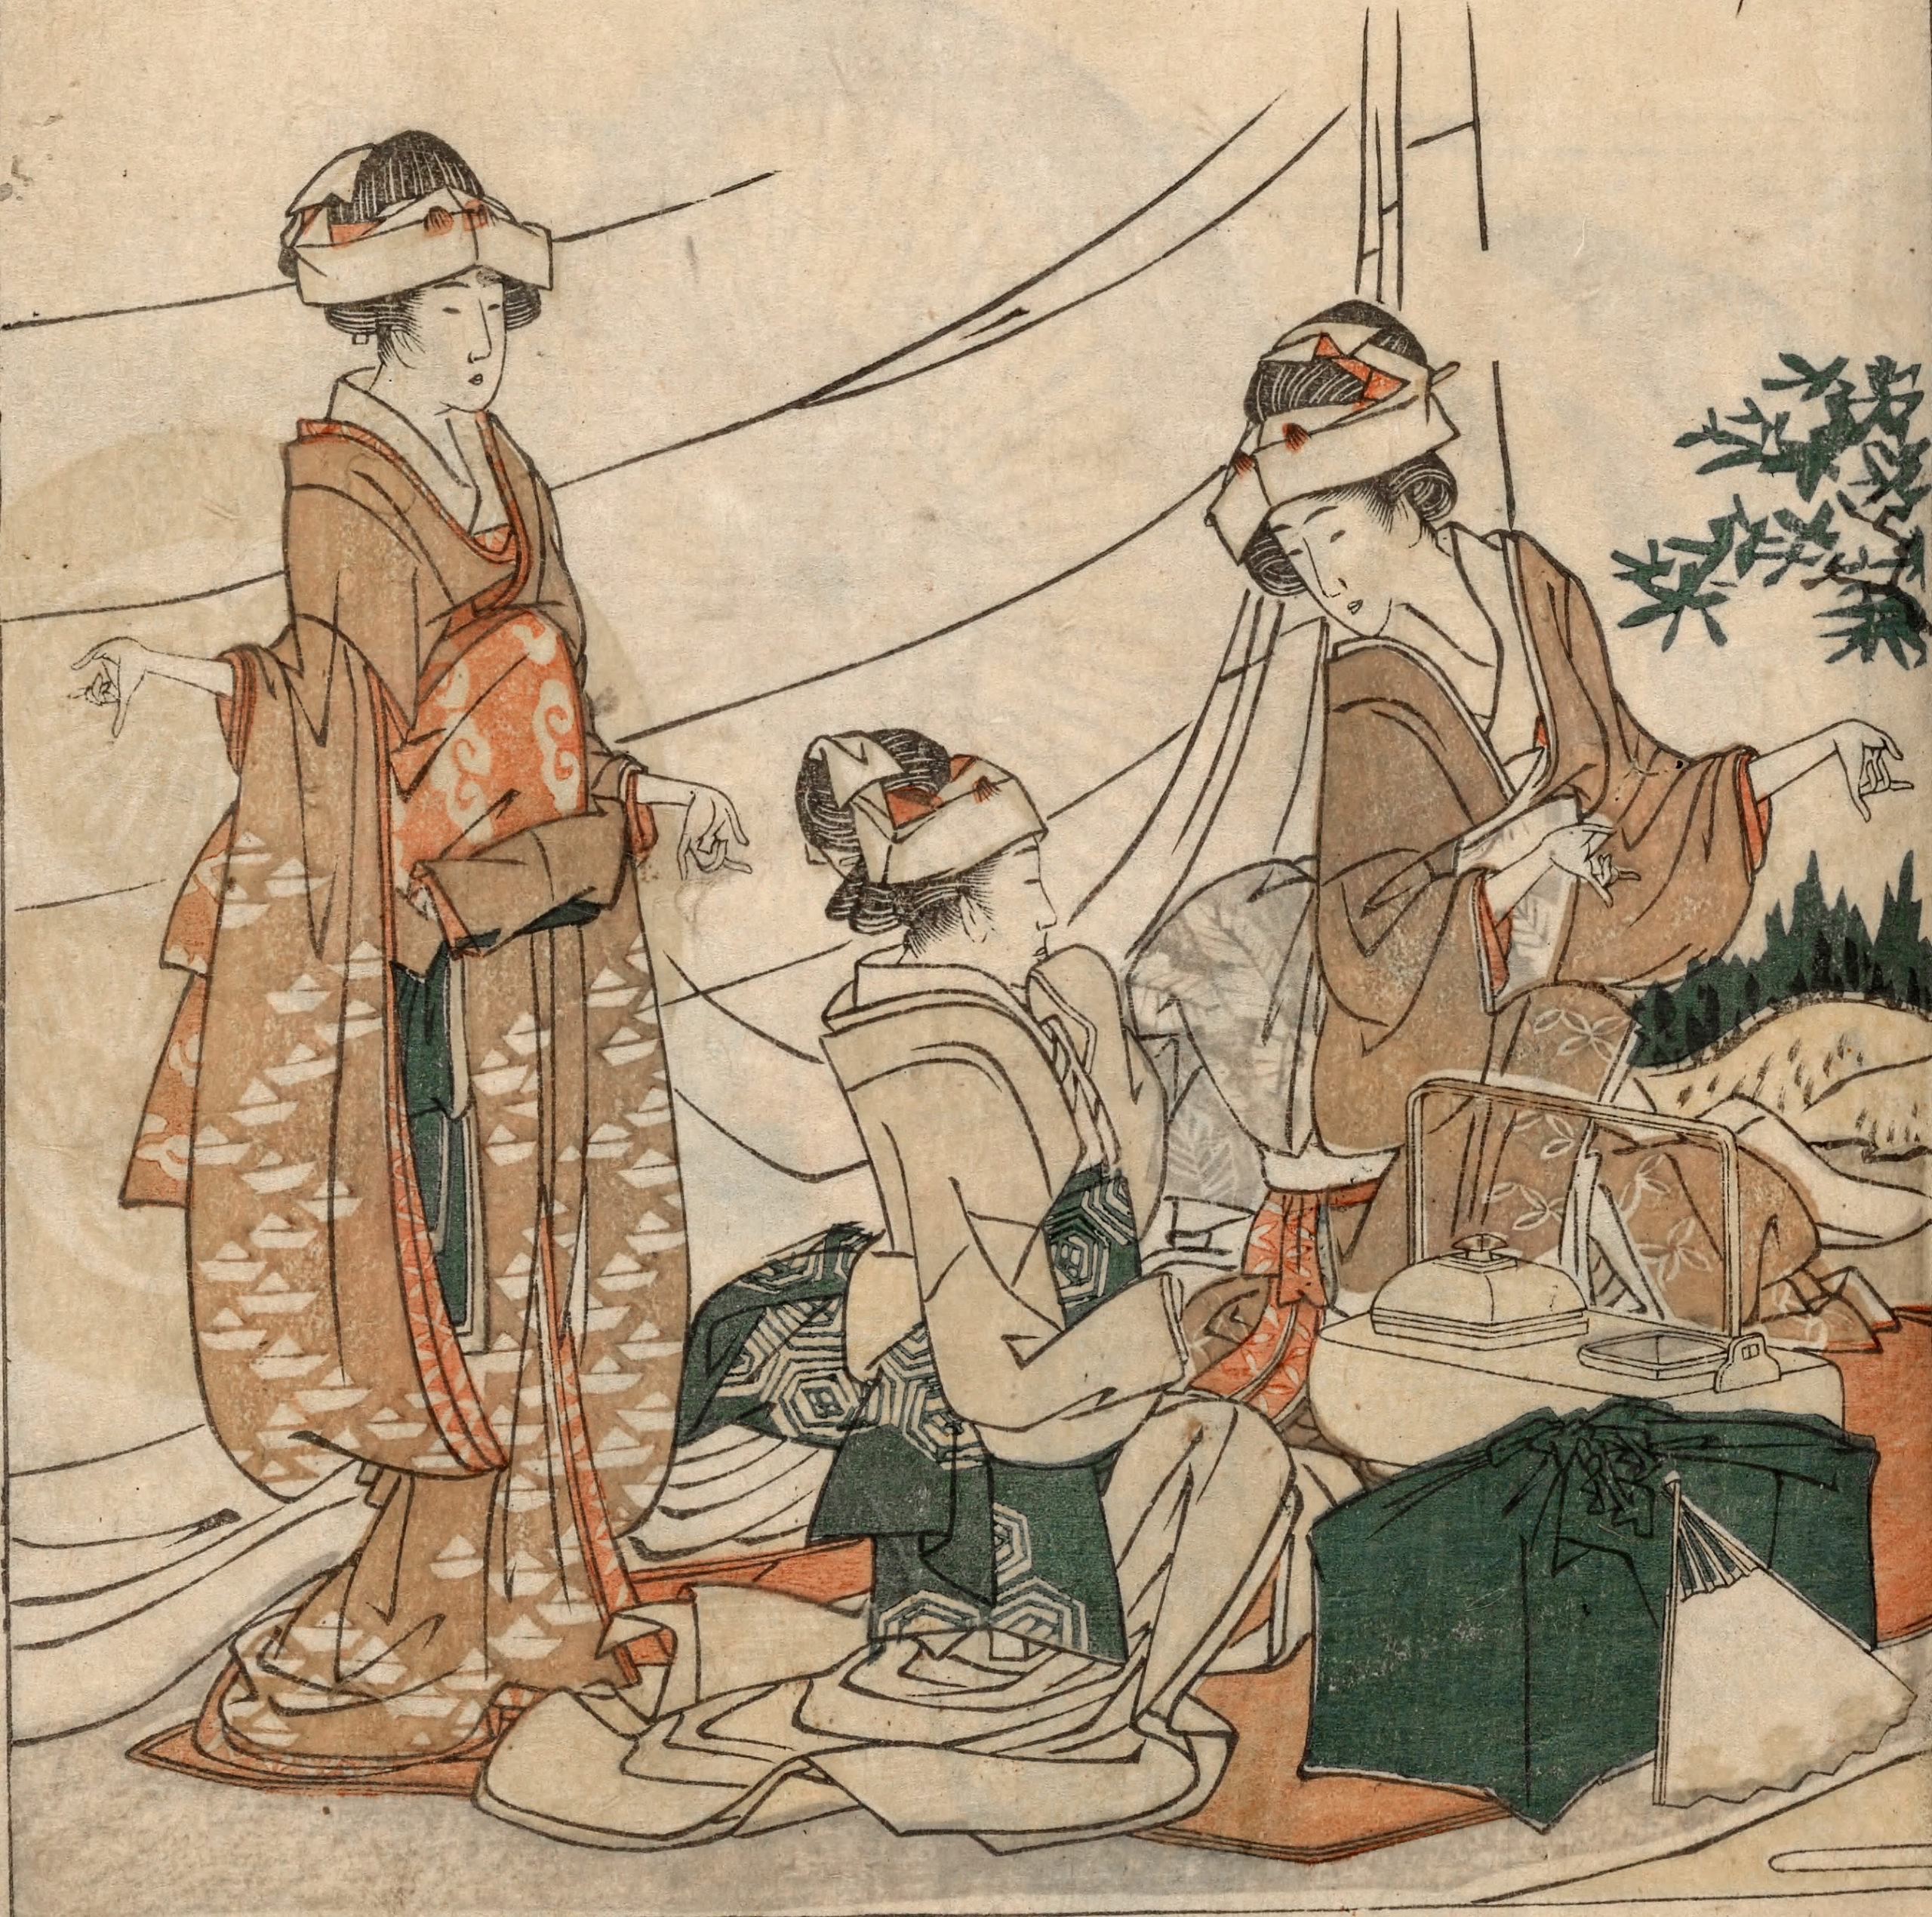 Detail of “Takatanobaba” in Katsushika Hokusai, Illustrated Book of Humorous Poems “Mountain on Mountain” (Ehon kyōka yama mata yama), 1804, woodblock printed book (Smithsonian Libraries)